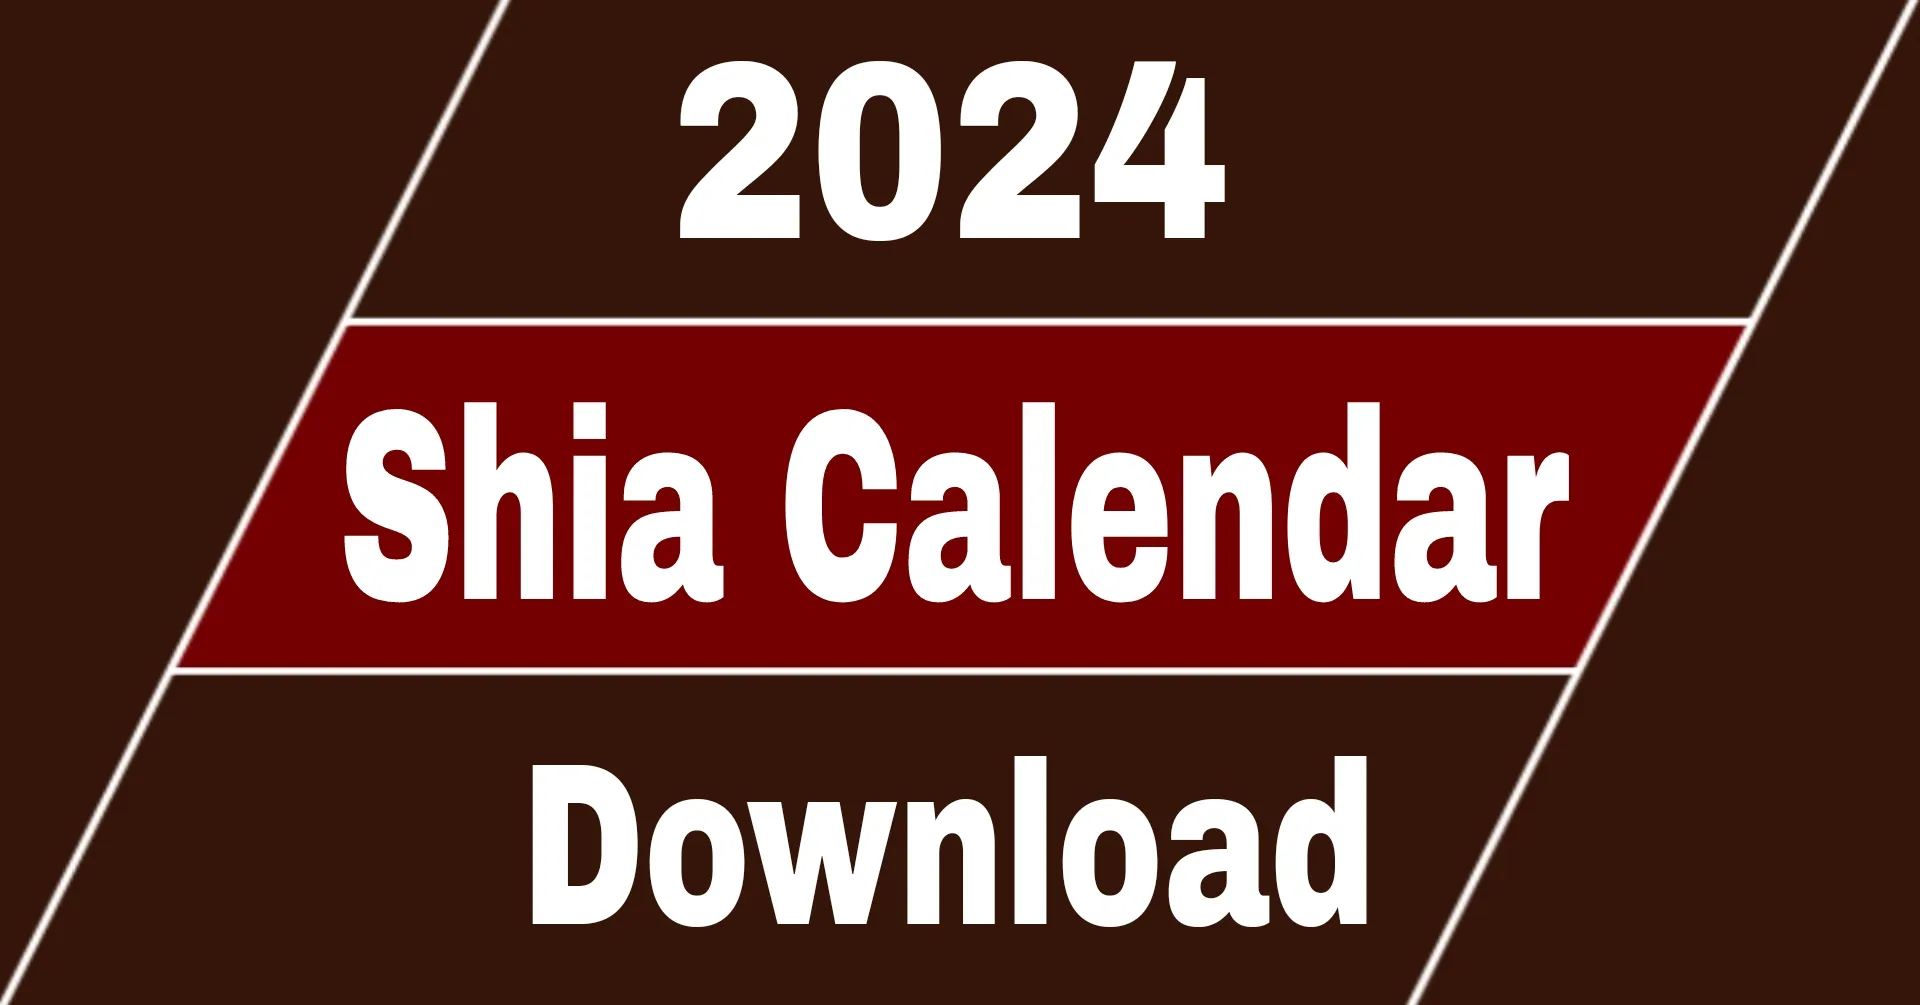 Shia Calendar 2024 pdf Download Urdu شیعہ کیلنڈر 2024